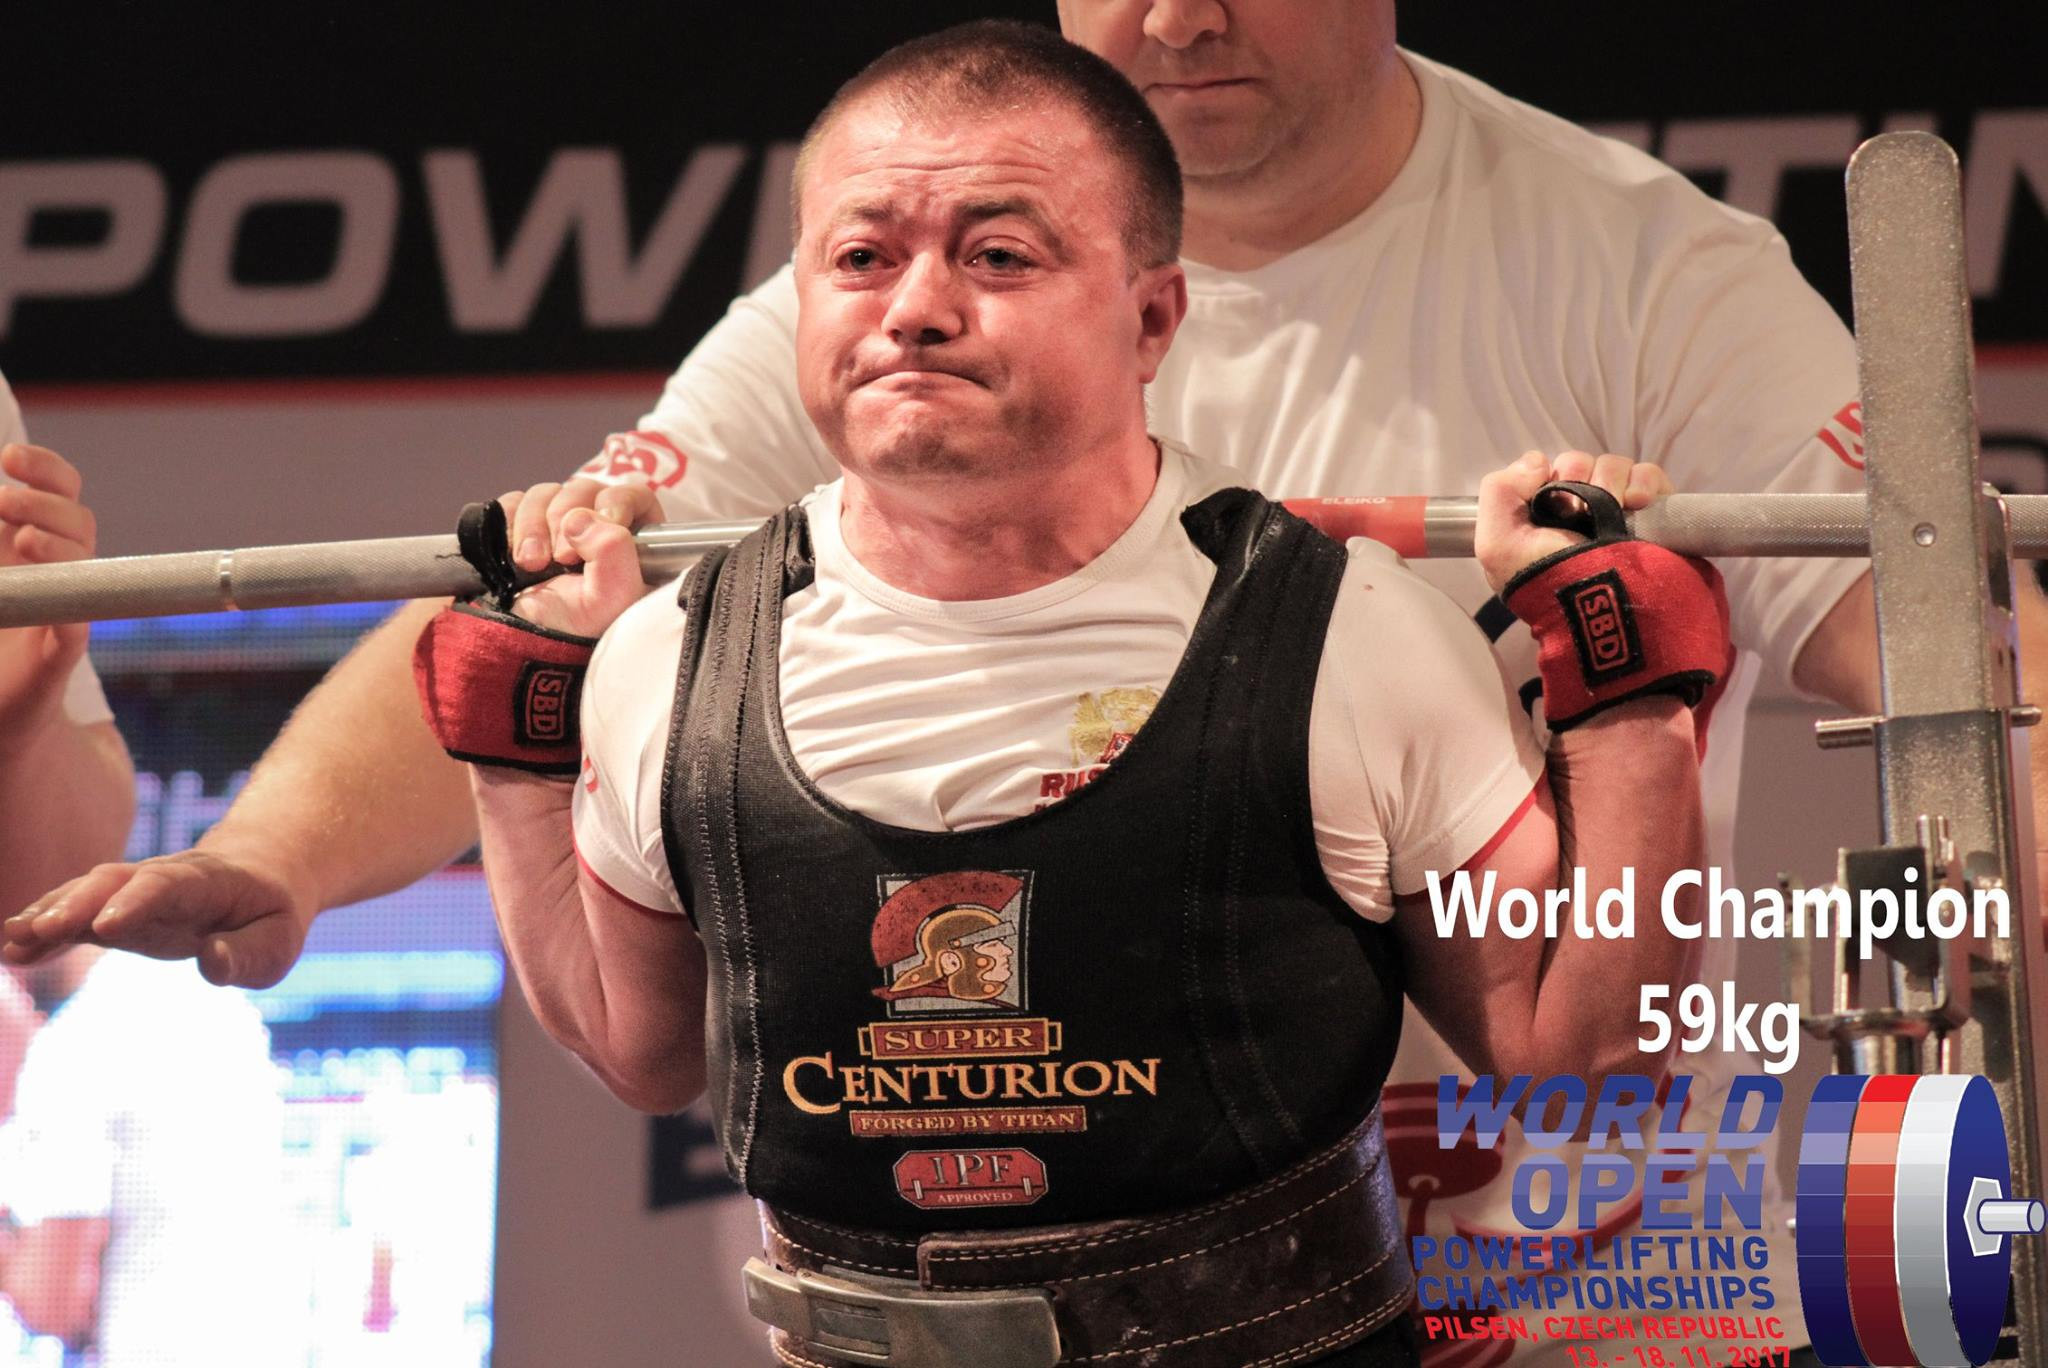 Russia’s Sergey Fedosienko won the 59kg title ©IPF